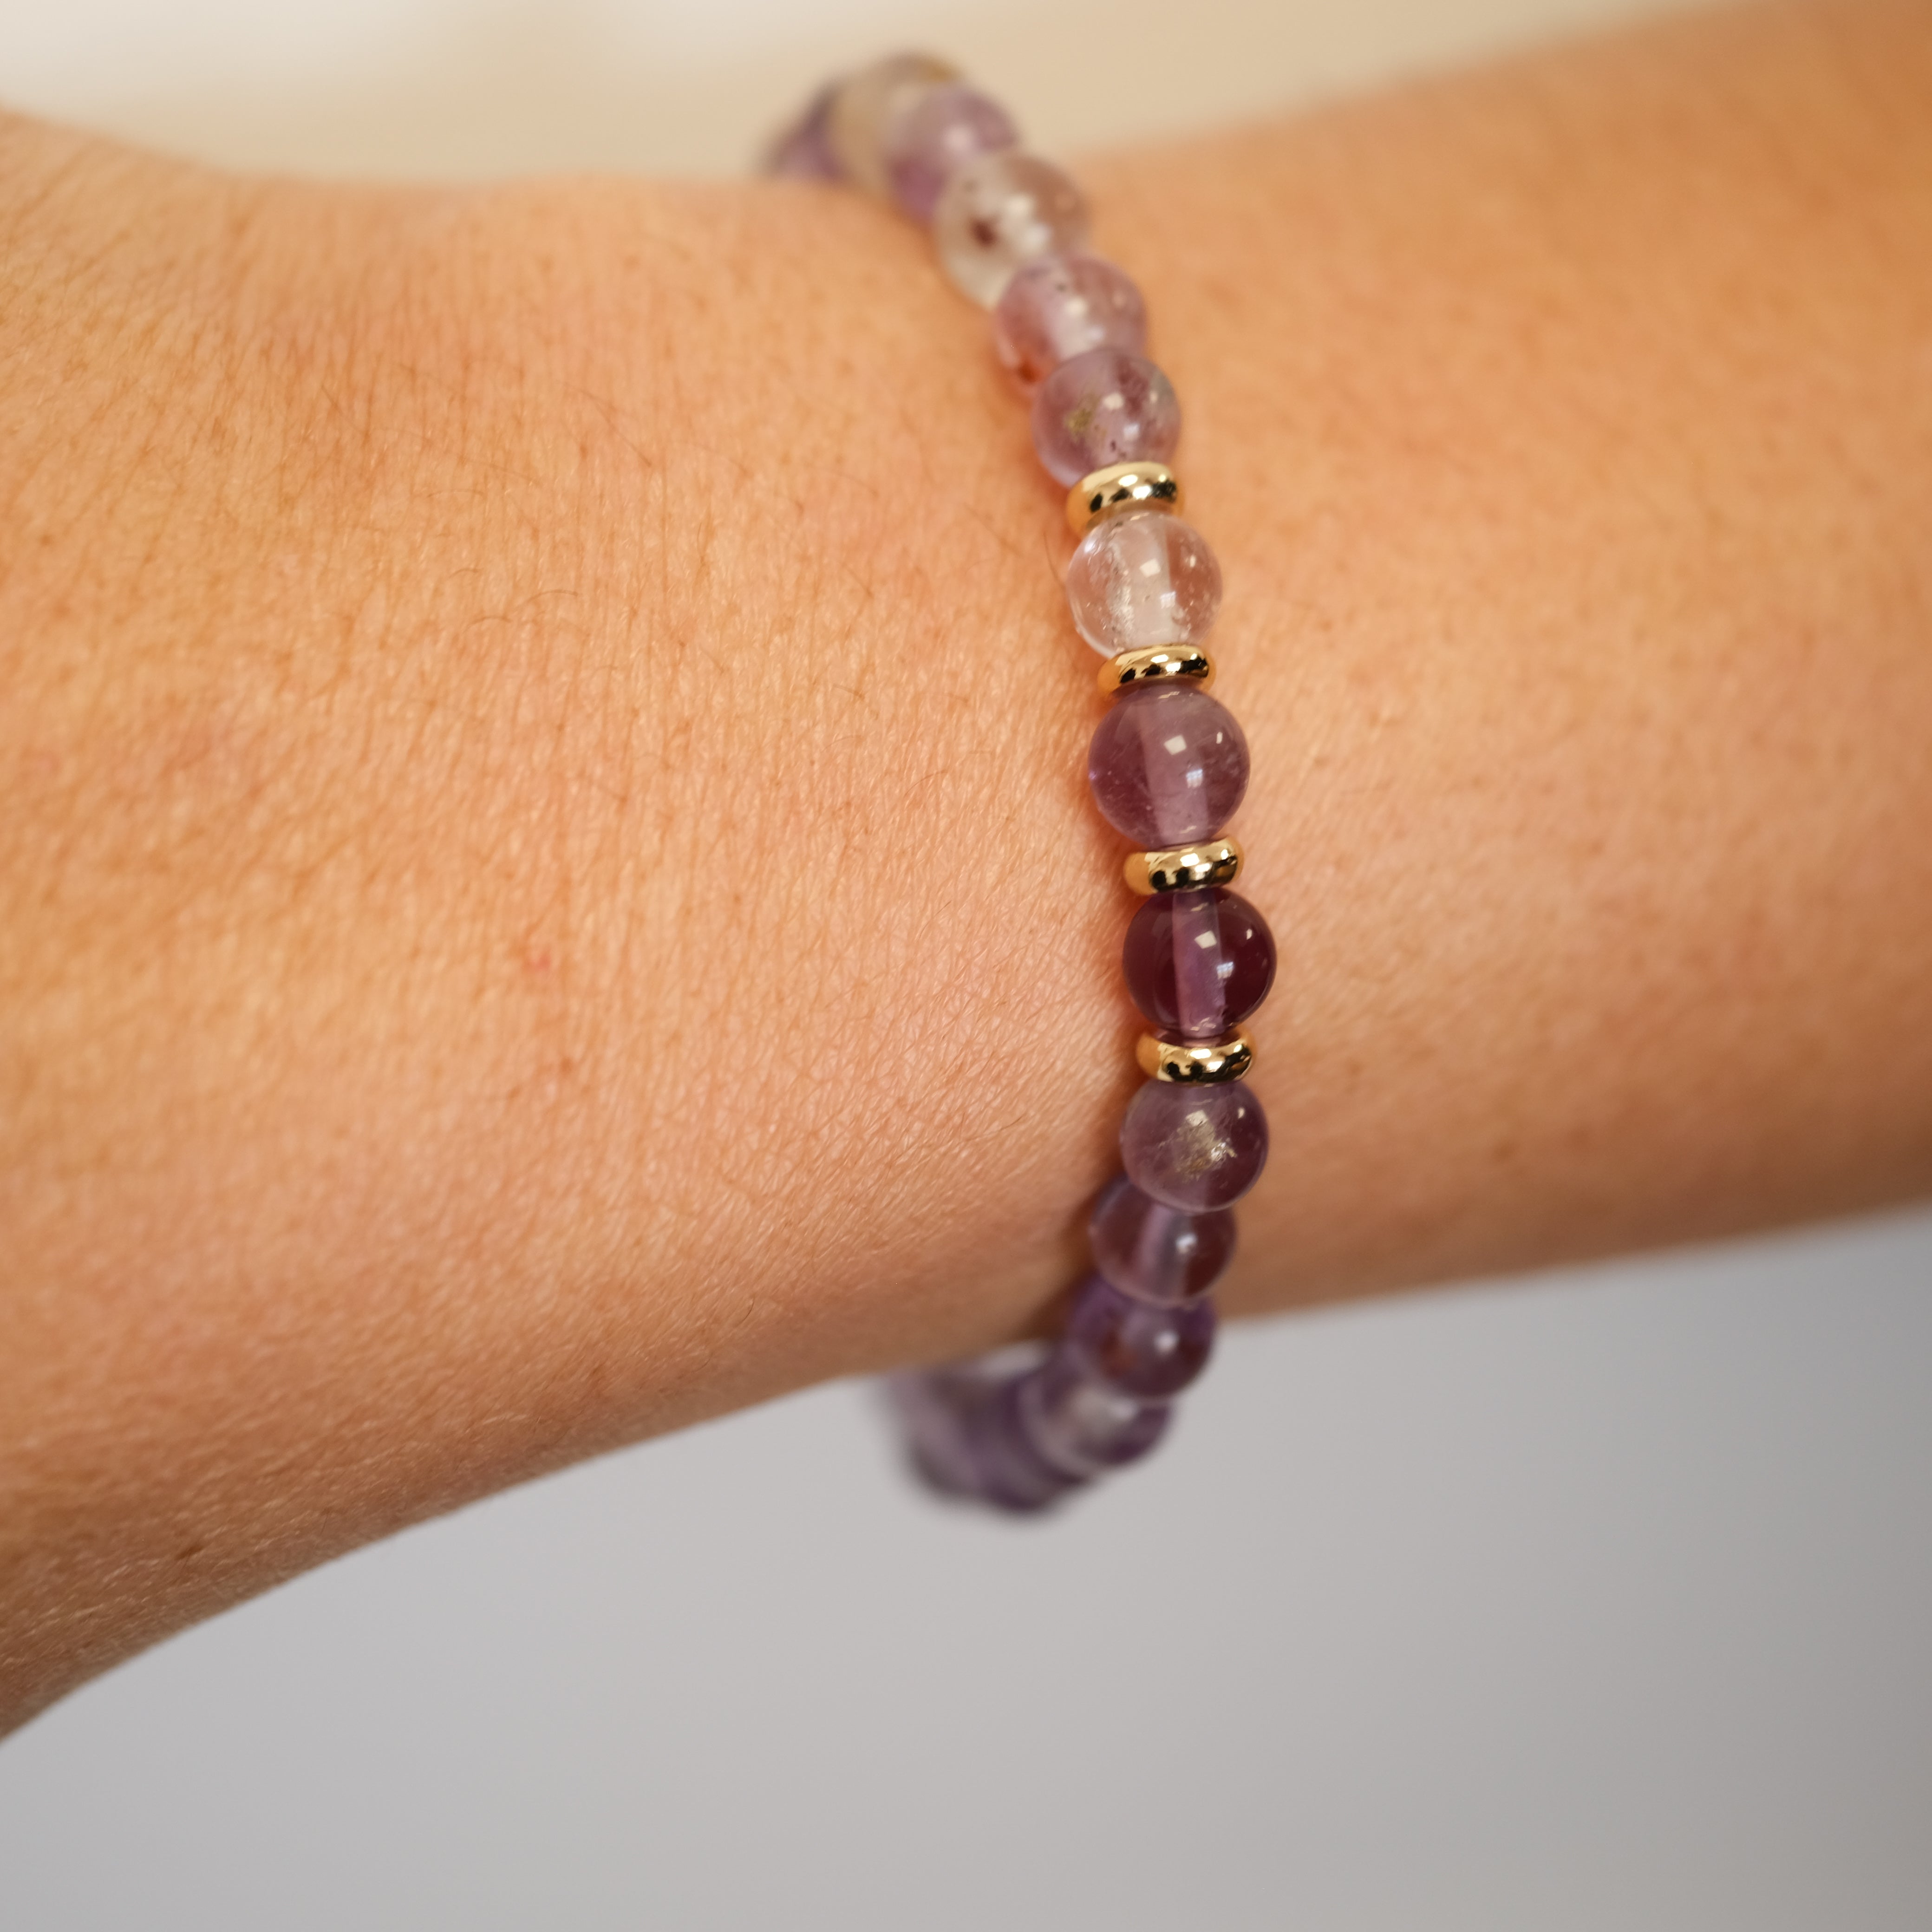 A phantom amethyst gemstone bracelet in 6mm beads worn on a model's wrist